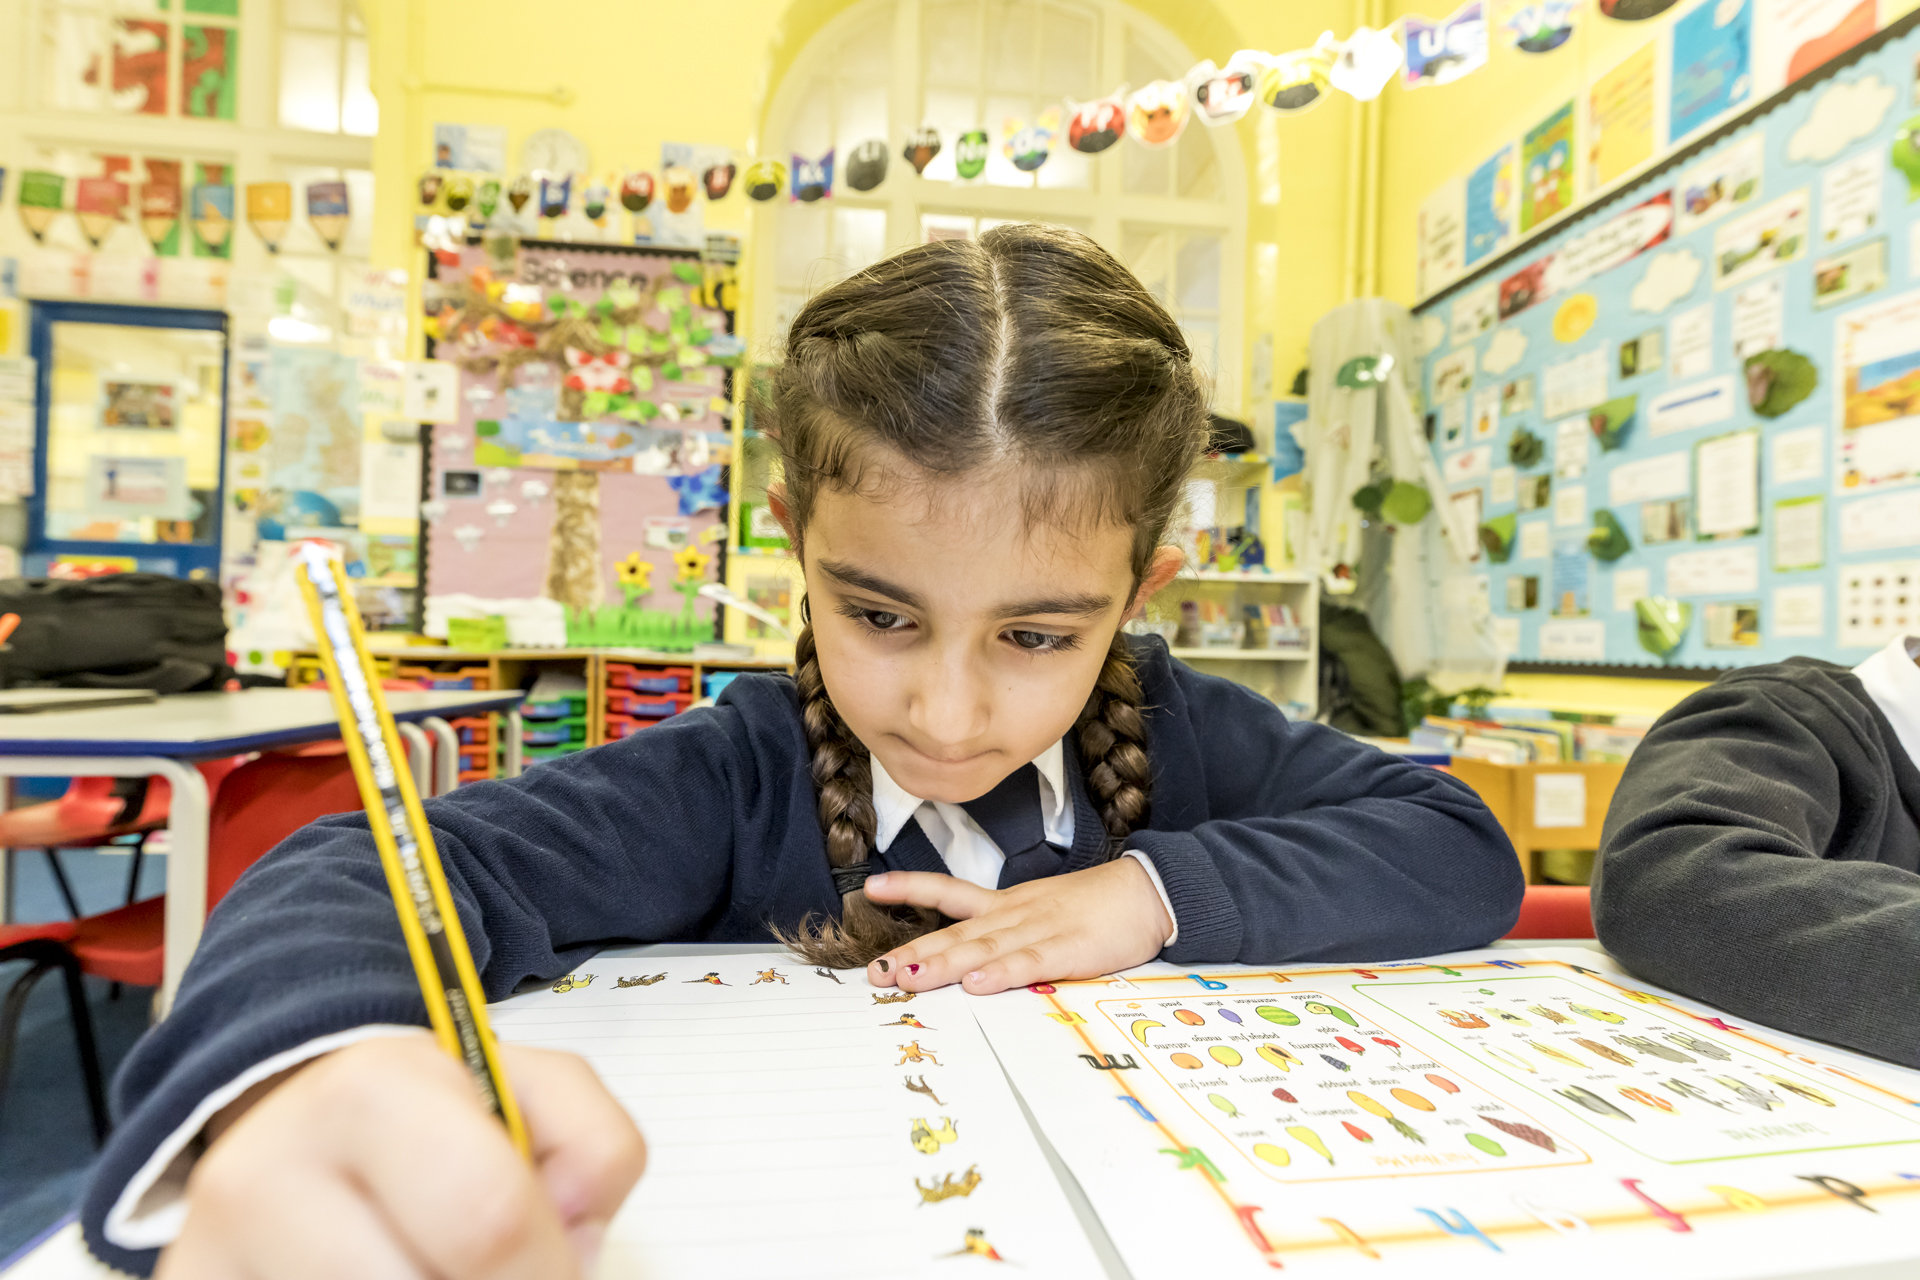 is homework compulsory in primary school scotland